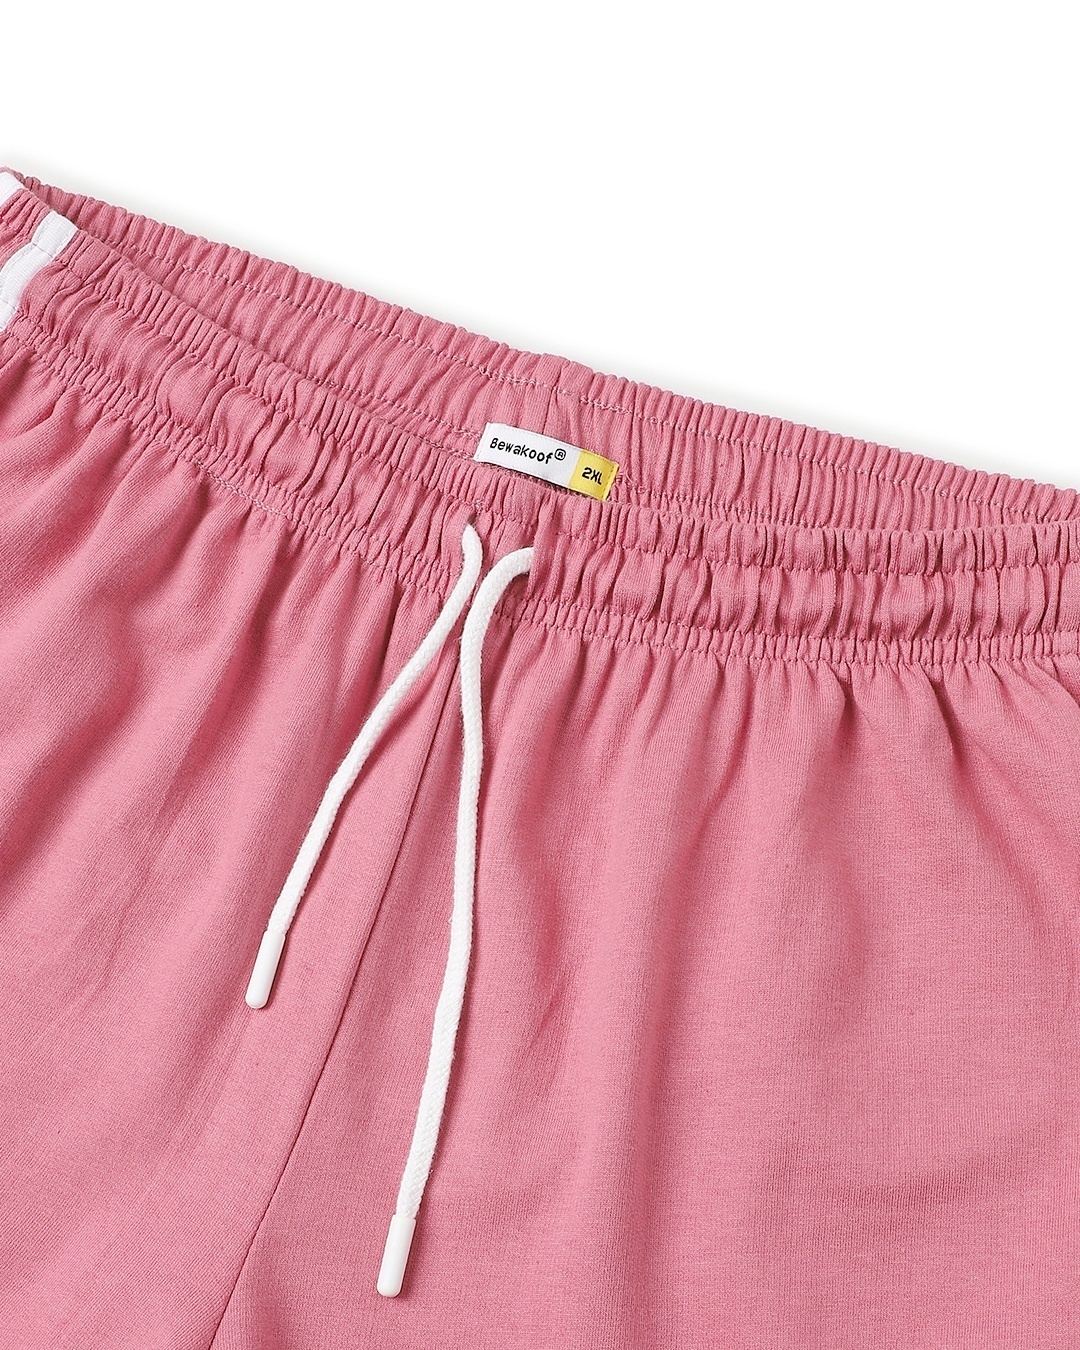 Shop Women's Heather Rose Plus Size Highwaist Contrast Shorts